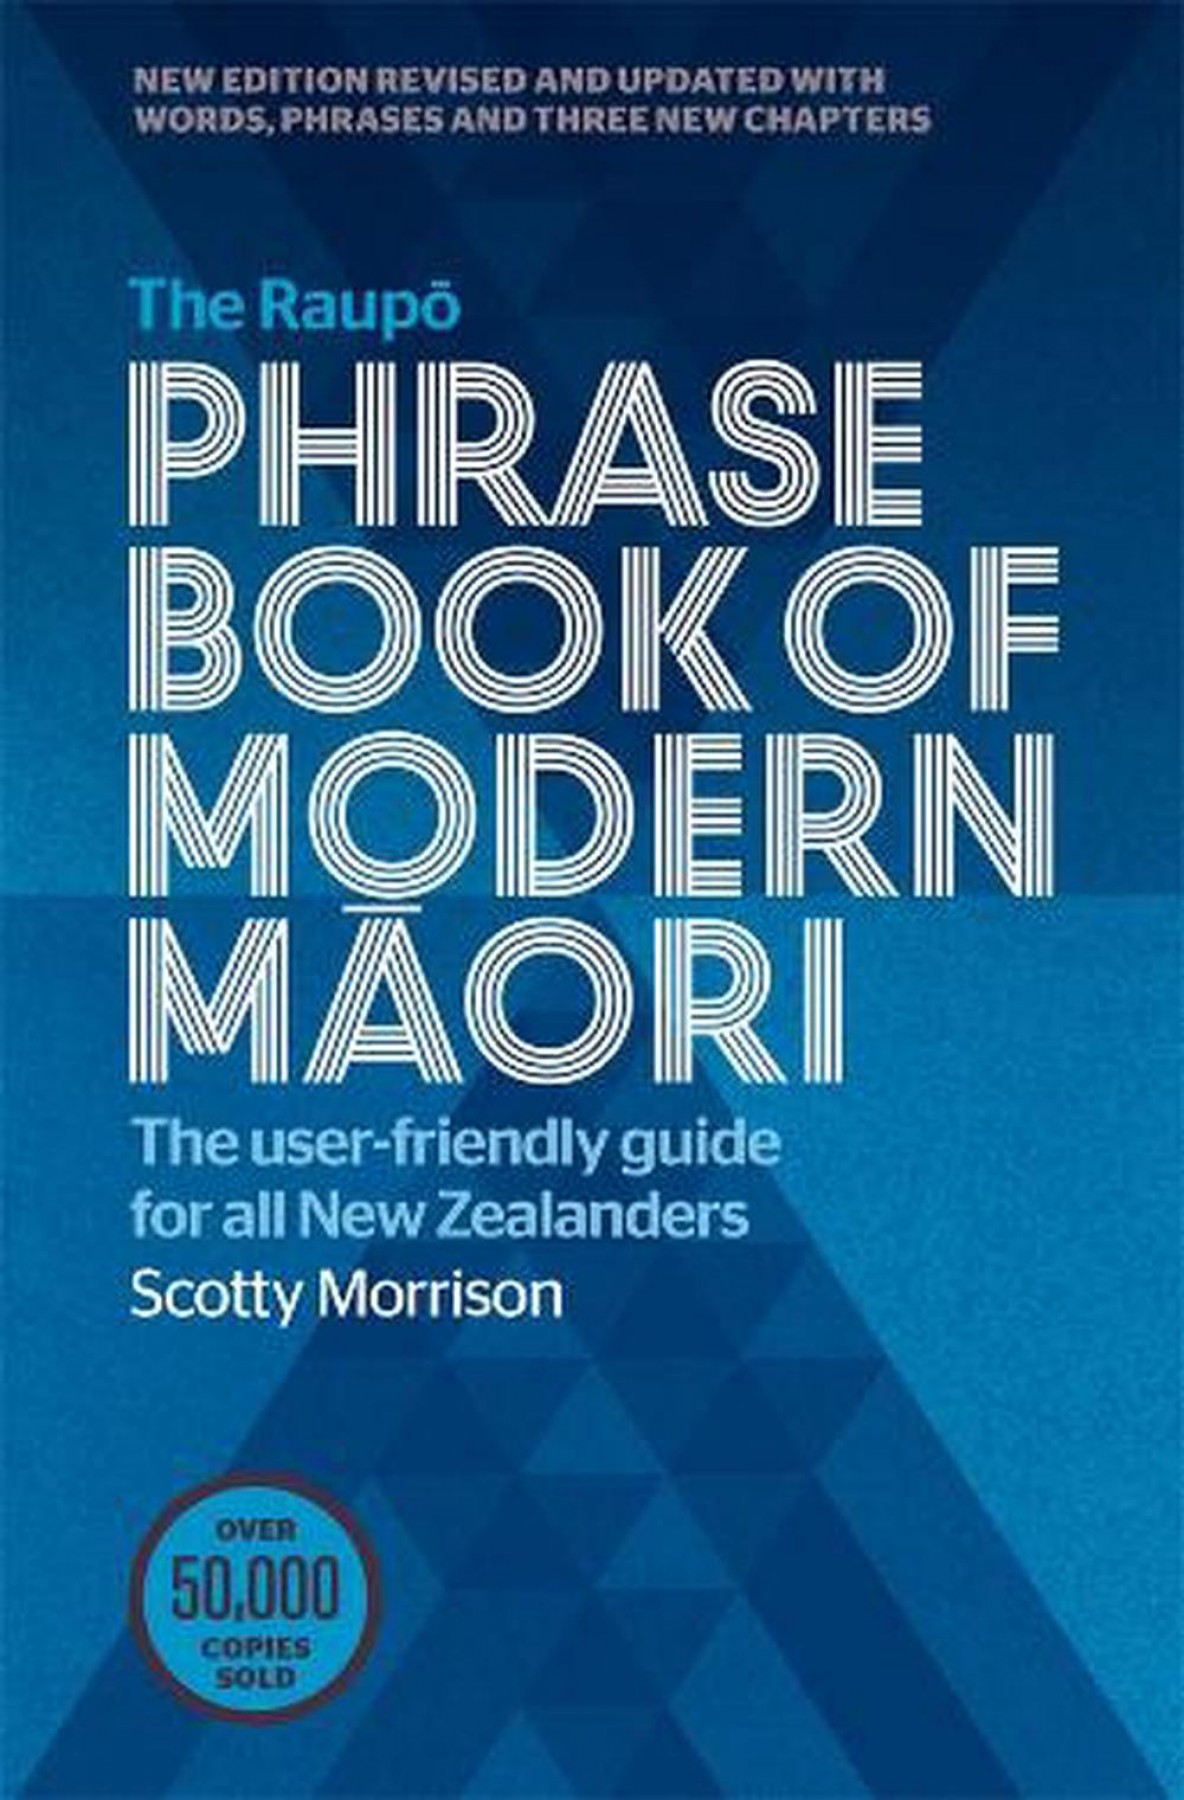 The Raupō: Phrase book of modern Māori